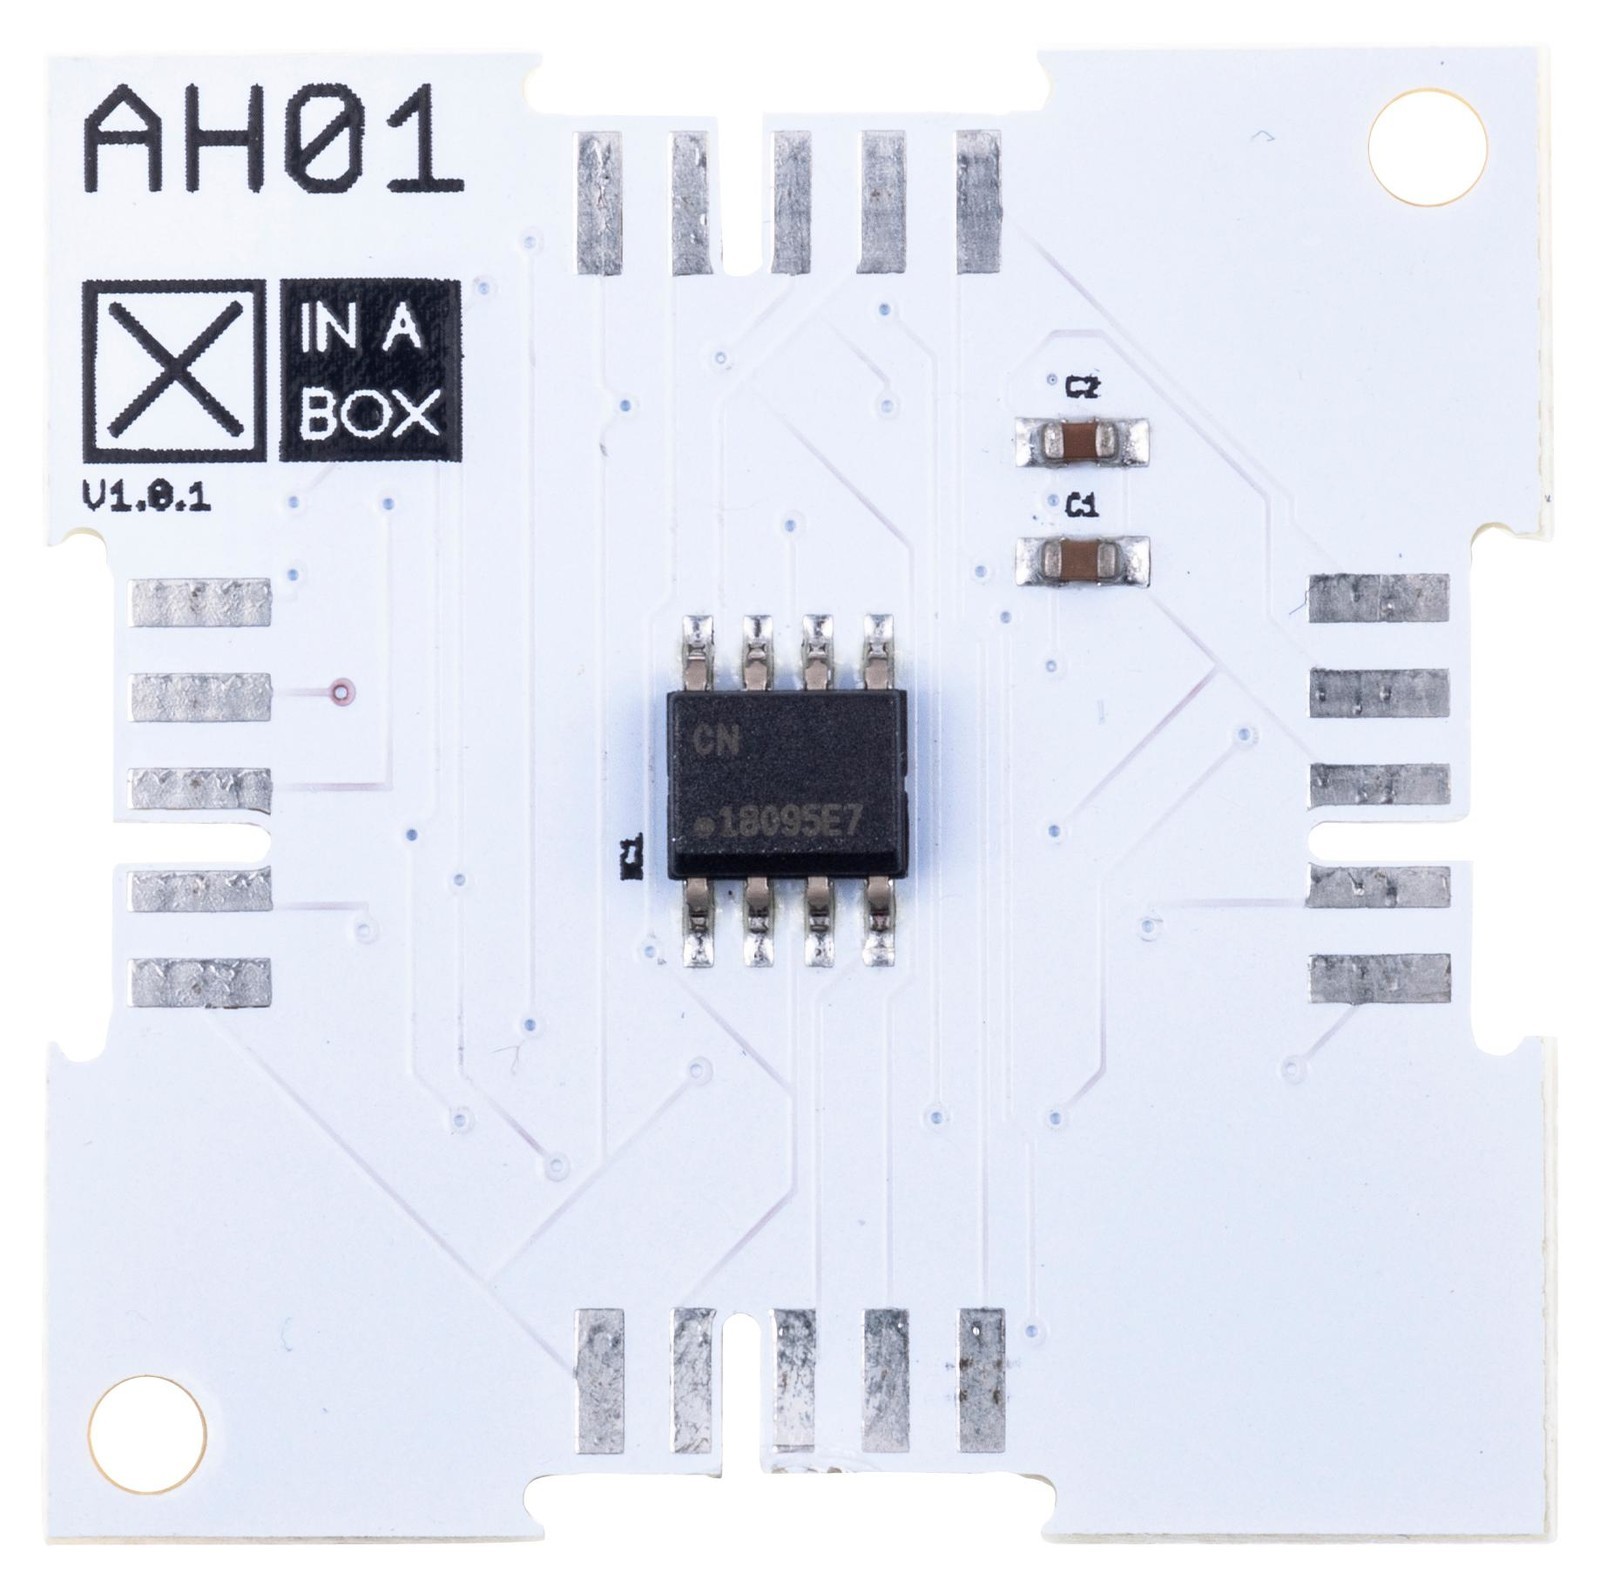 Xinabox Limited Ah01 Sha-256 Hardware Encryption Module